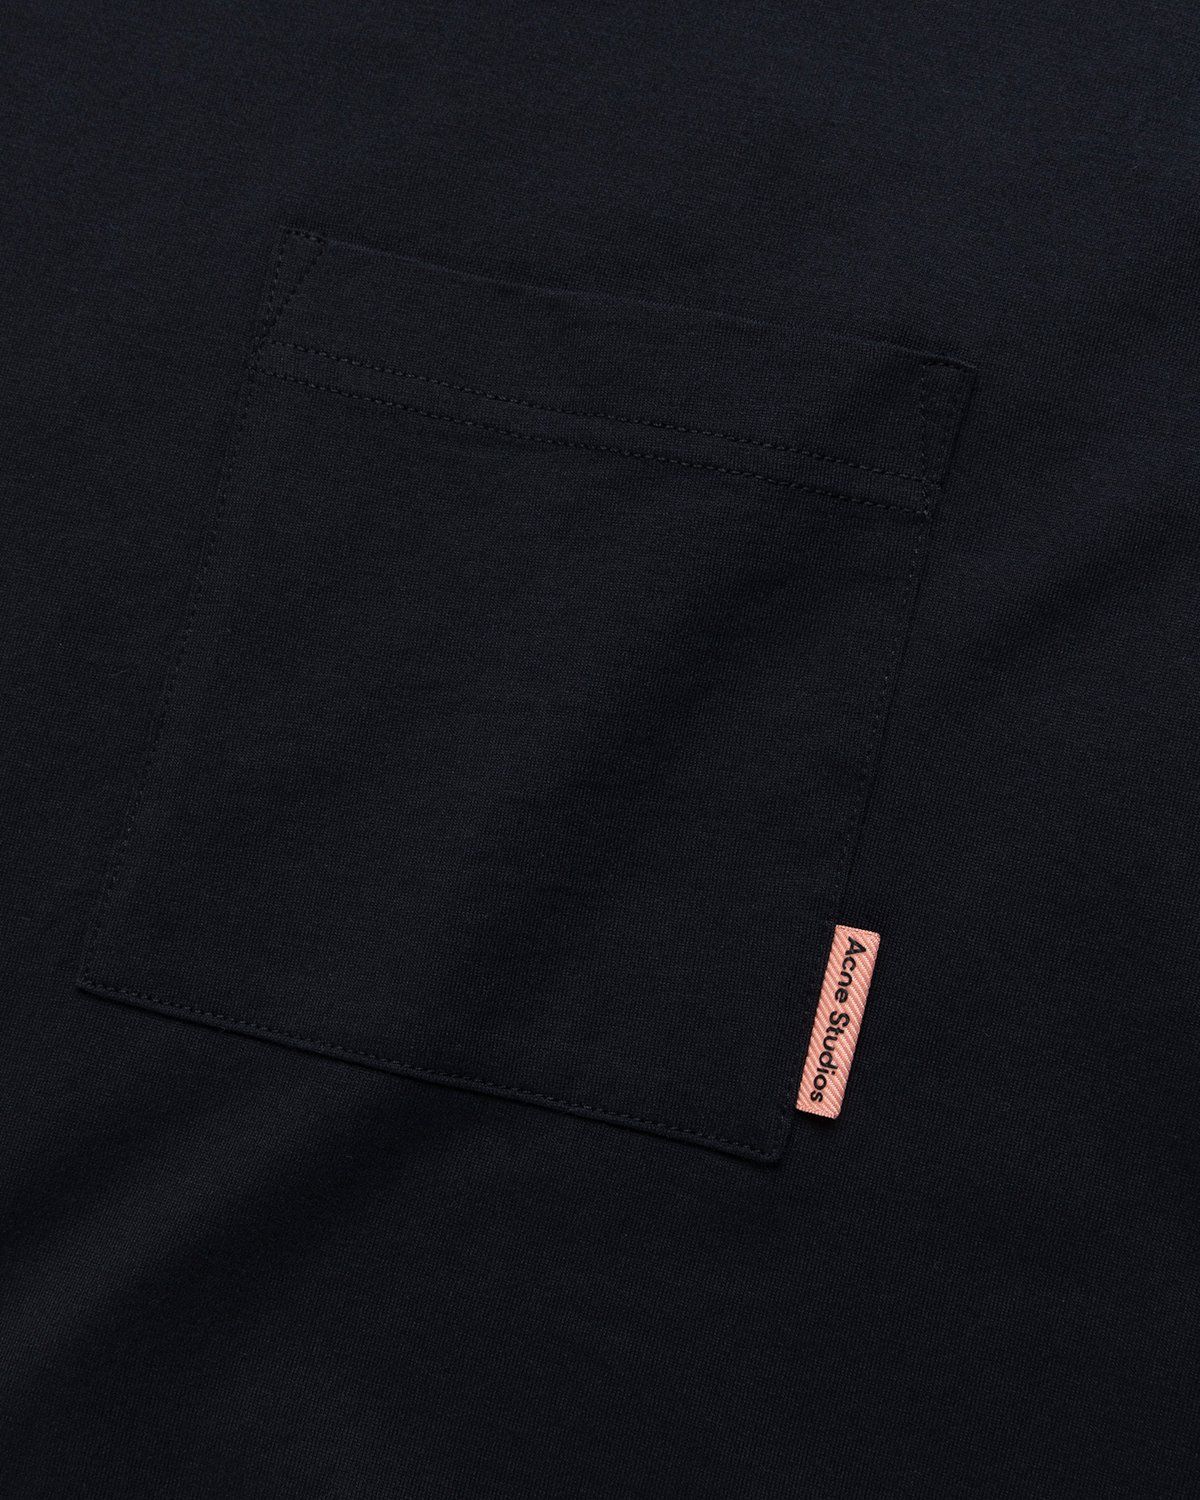 Acne Studios – Short Sleeve Pocket T-Shirt Black - T-Shirts - Black - Image 3